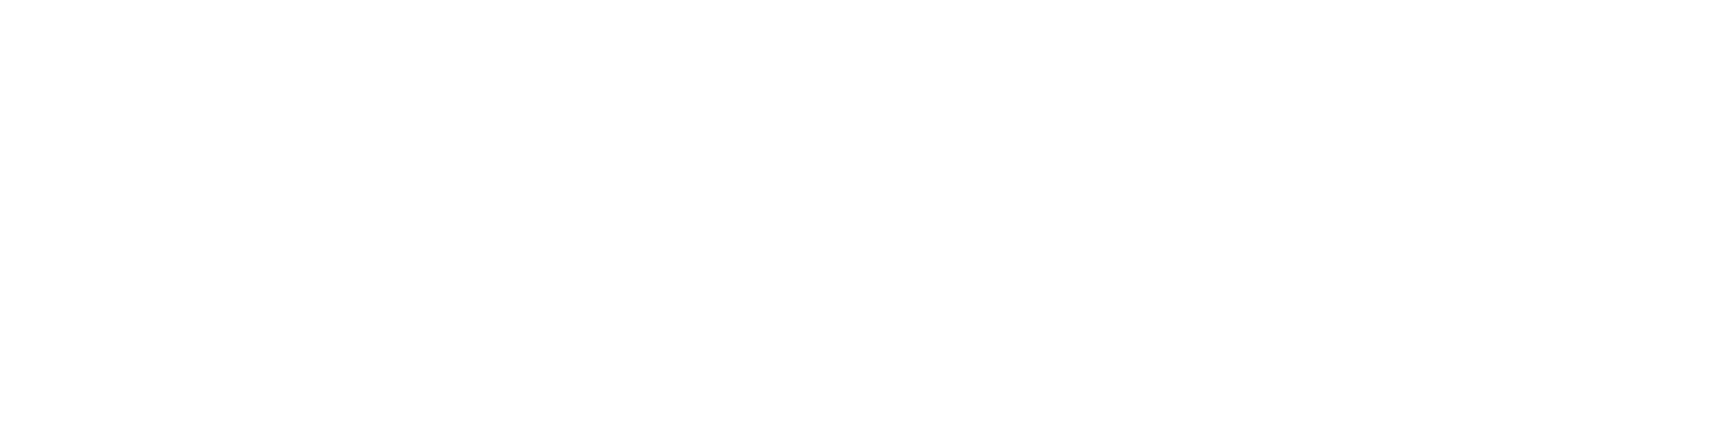 ghaas logo white